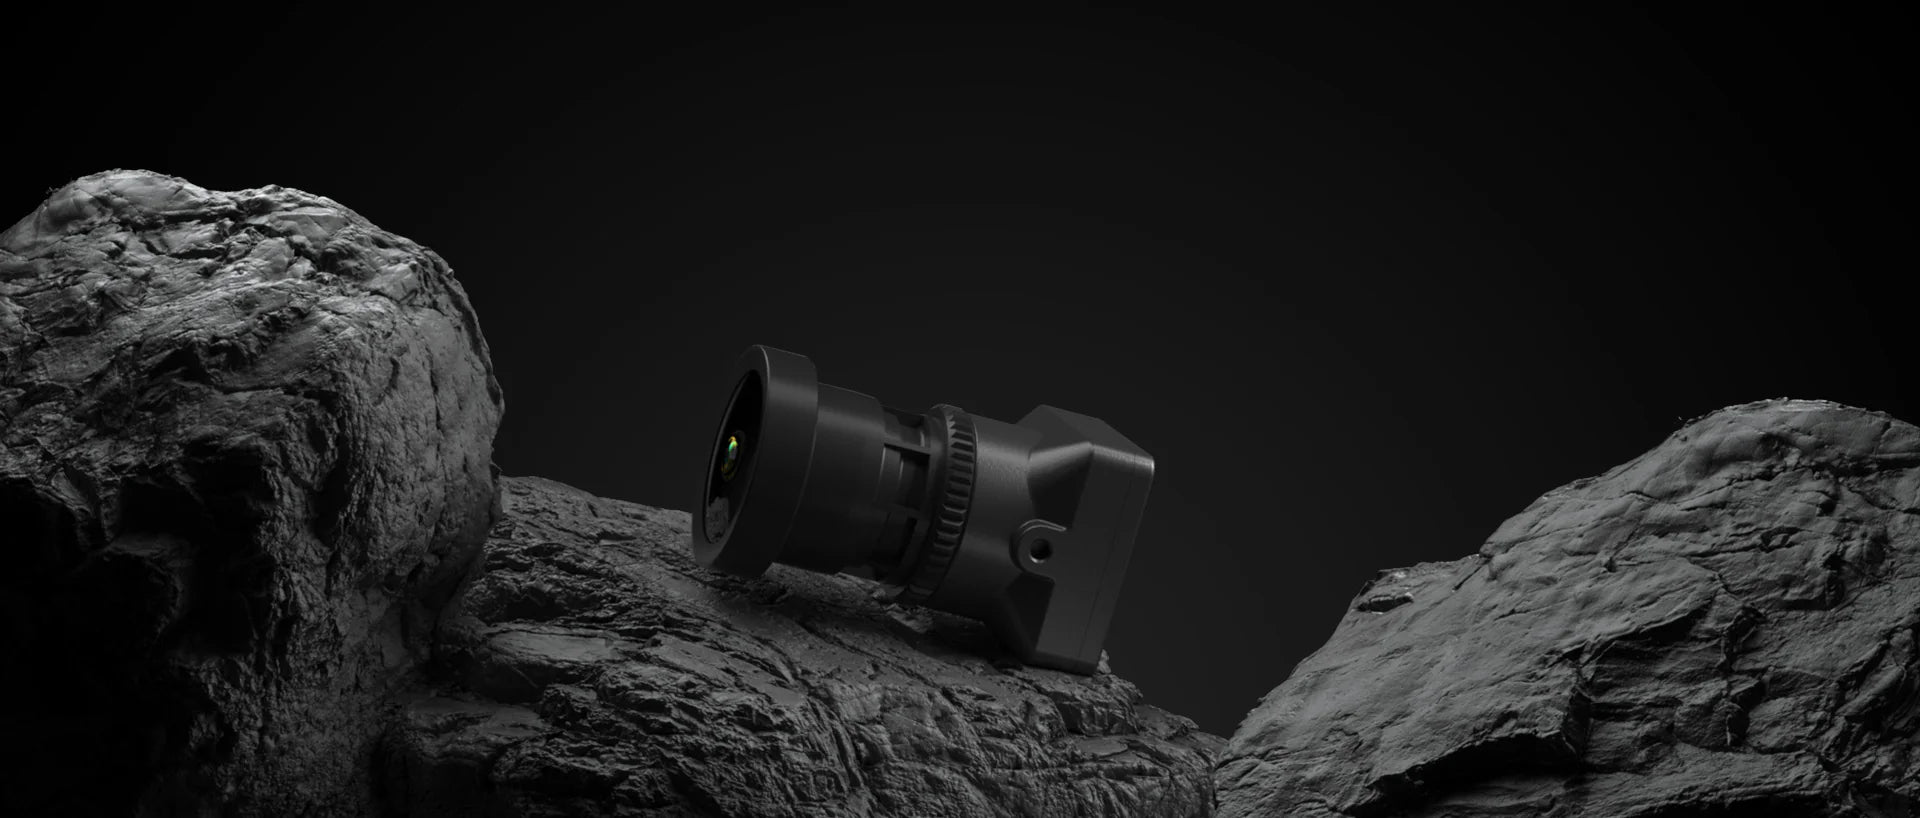 Caddx Infra Analog AI Enhanced Night Vision Camera